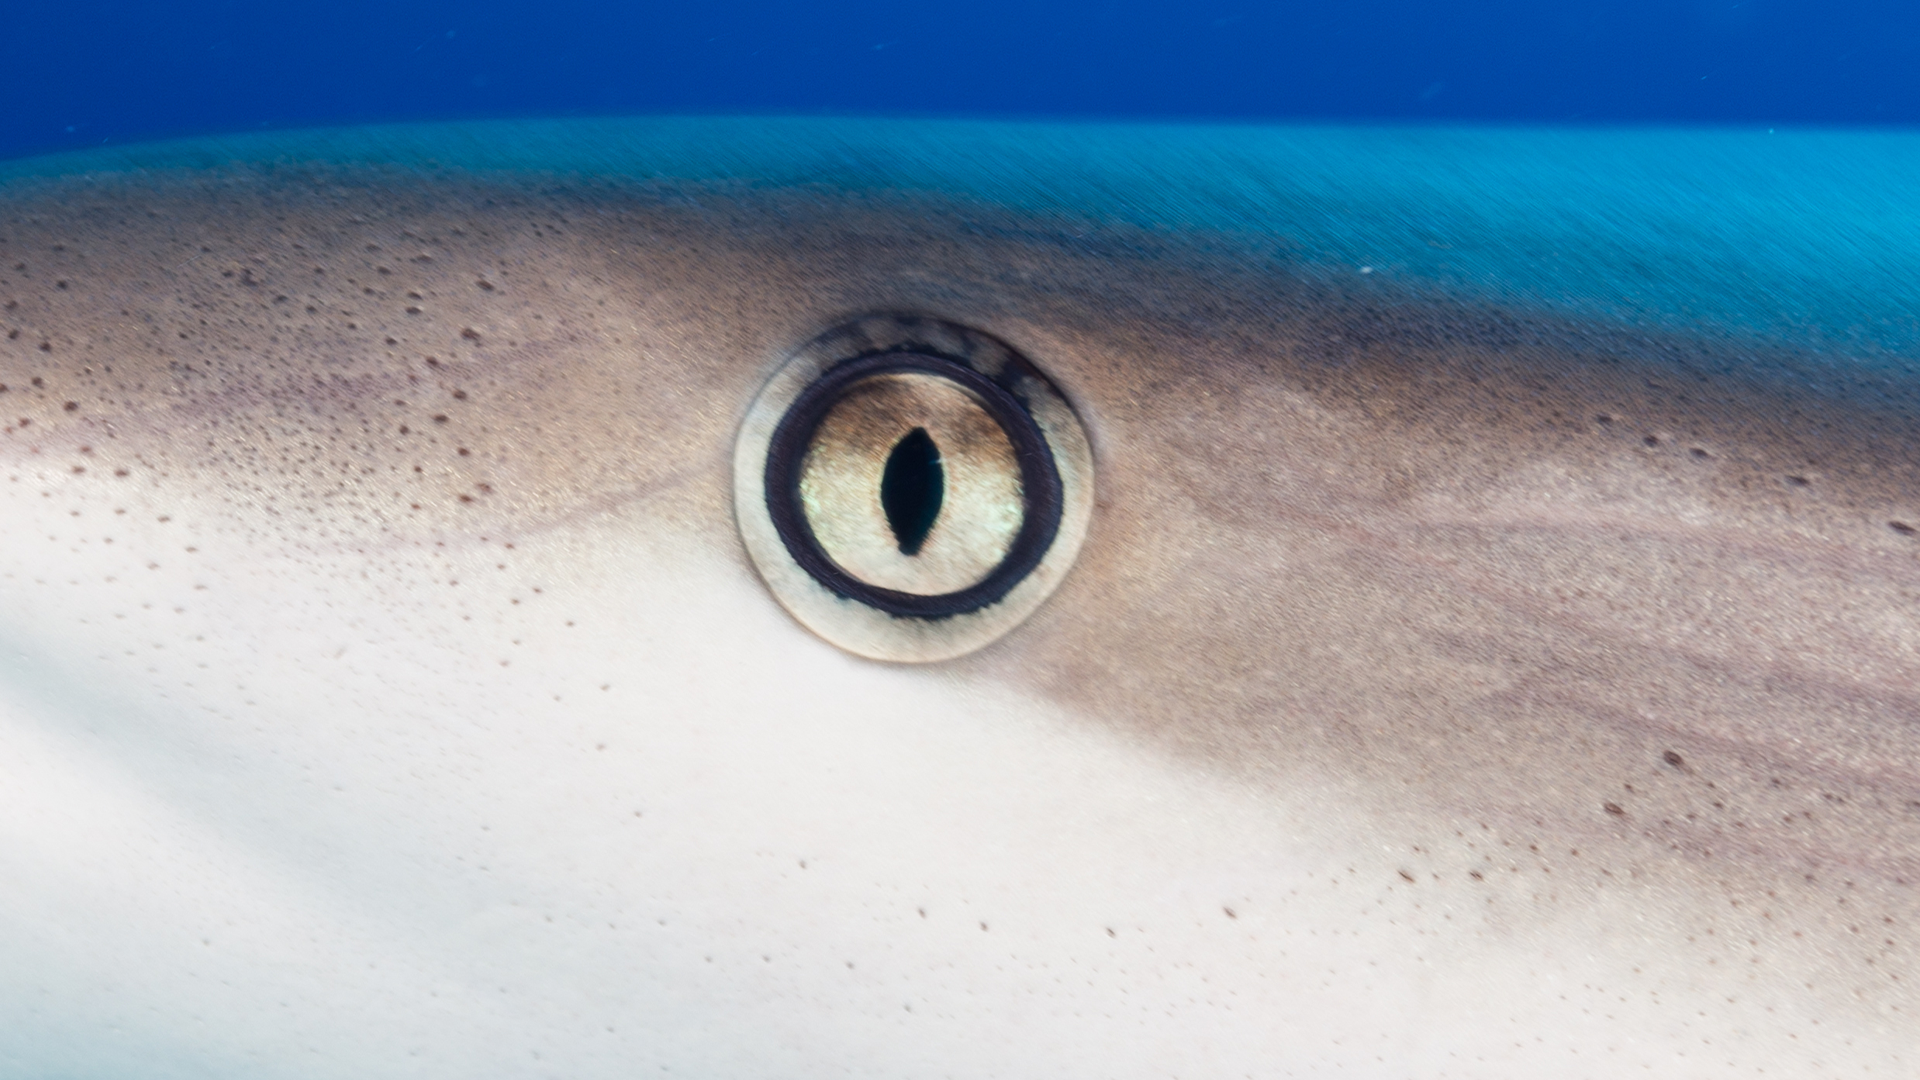 A shark's eye